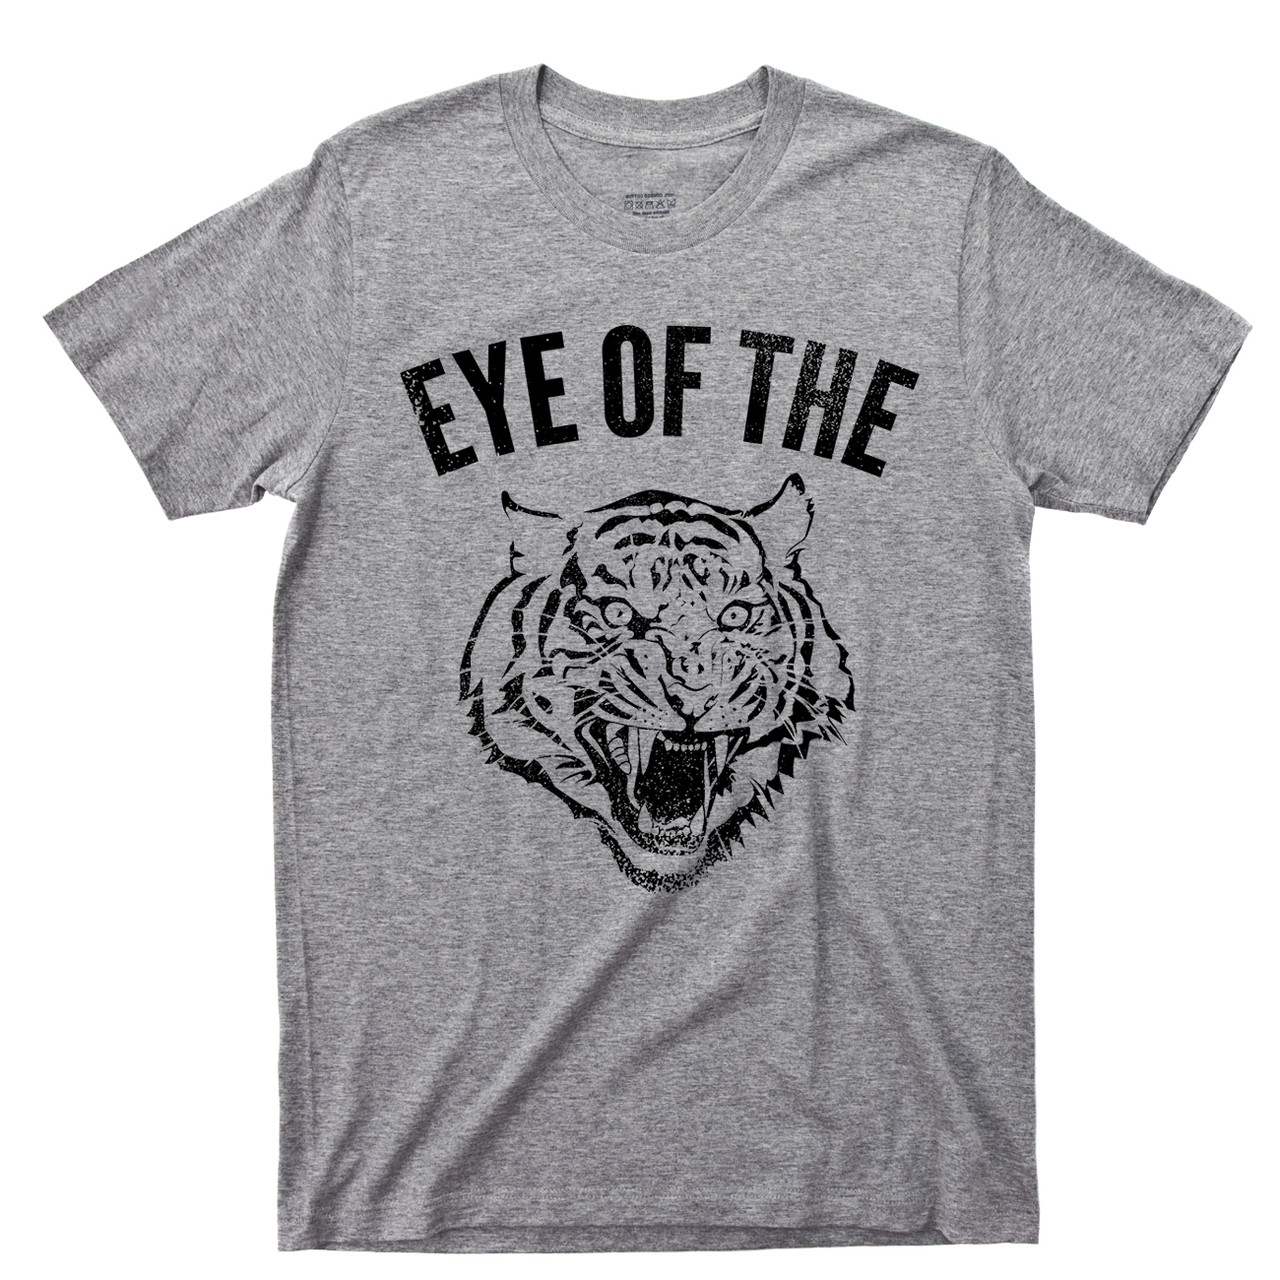 eye of the tiger shirt